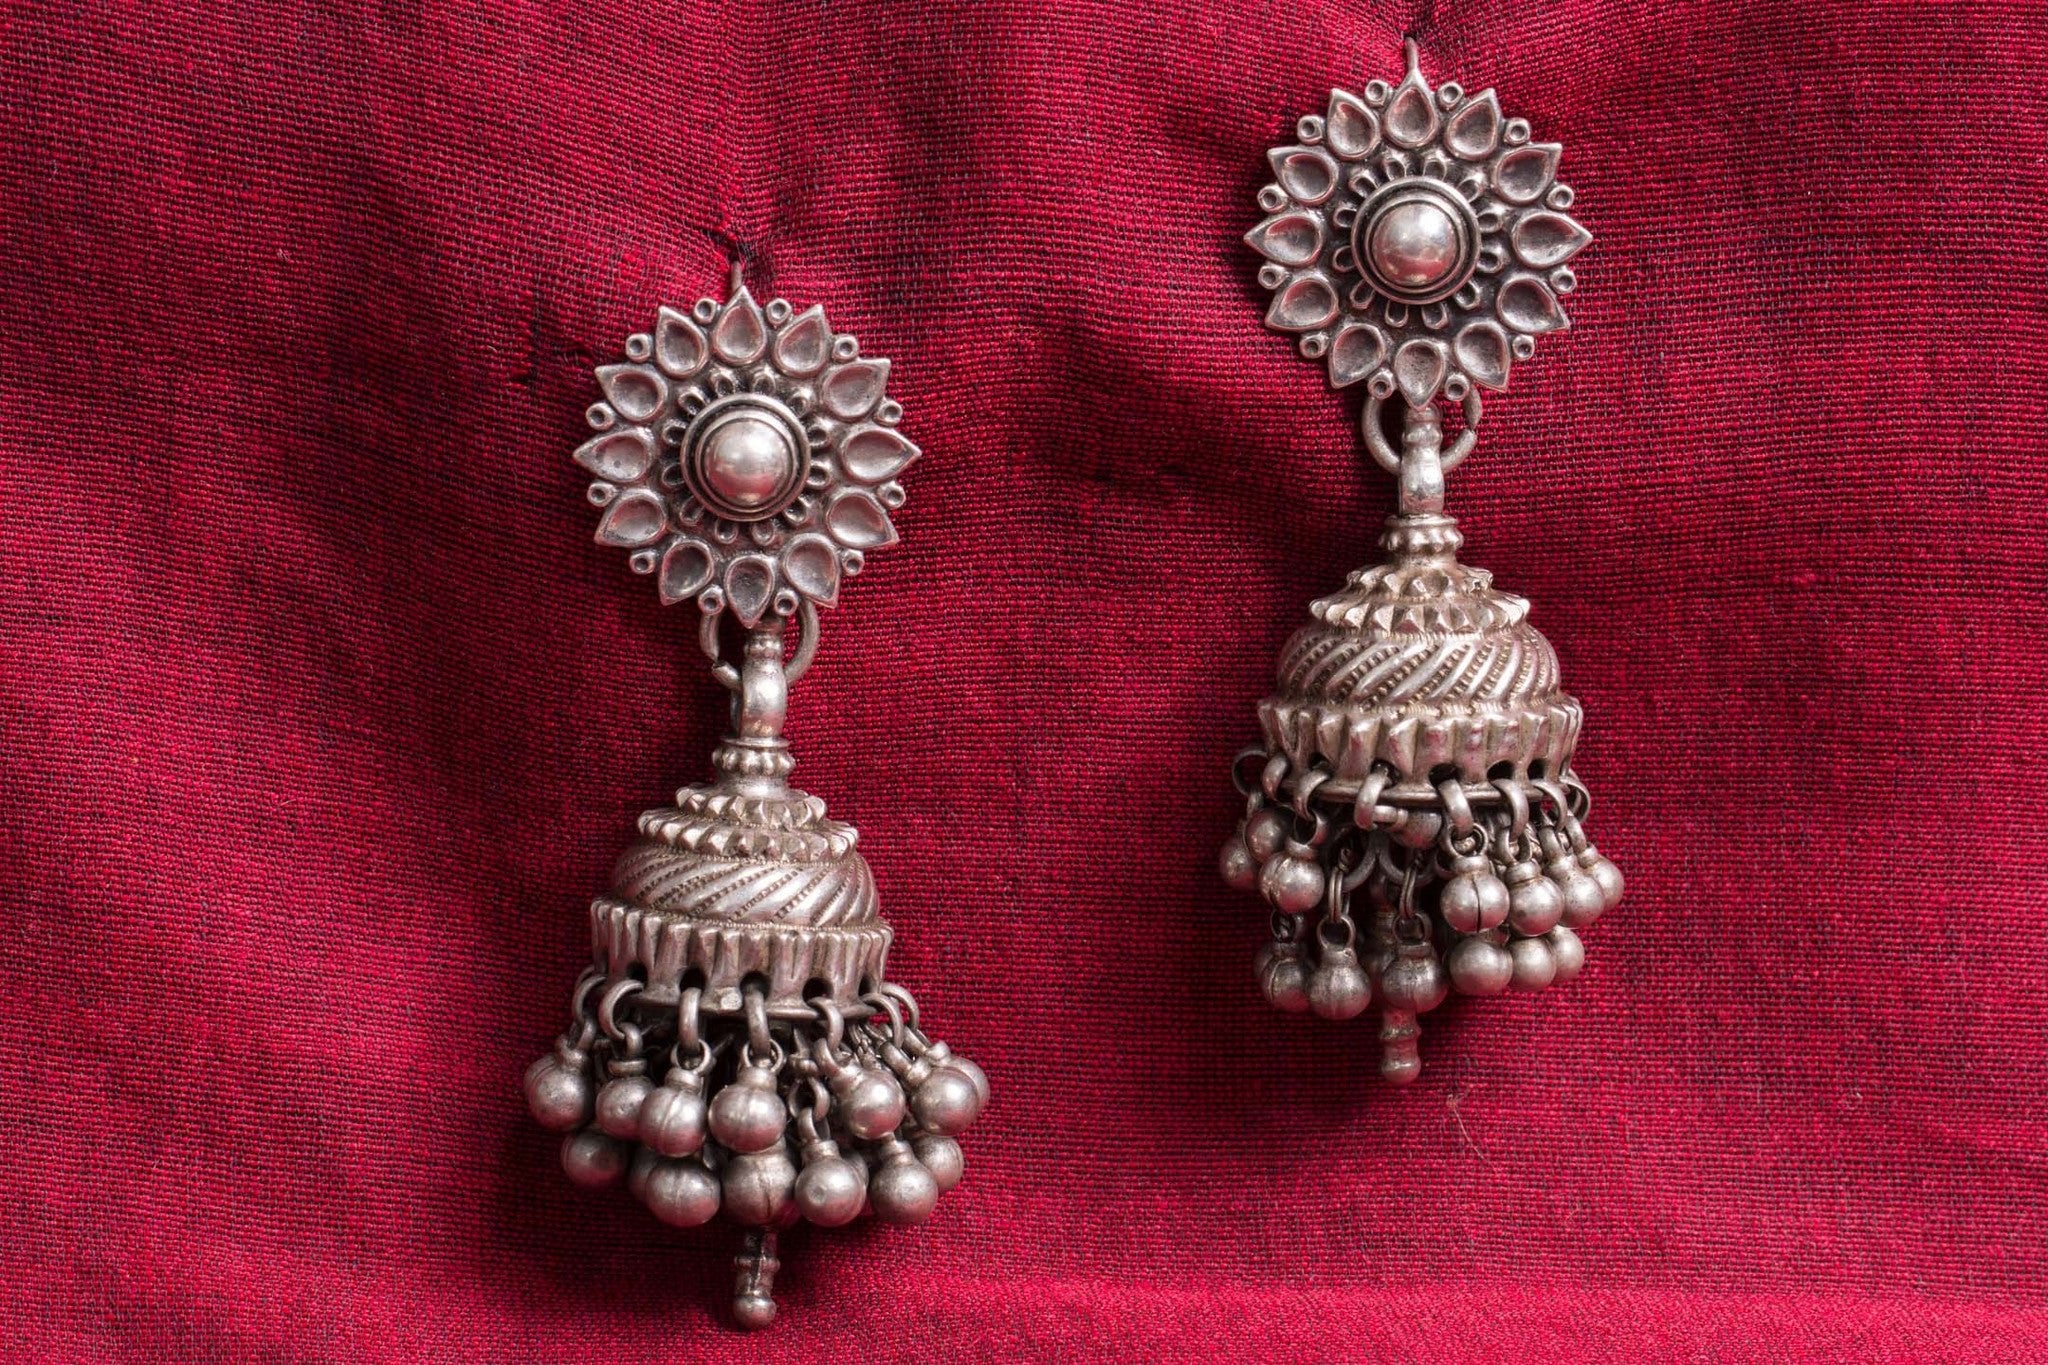 20a517-silver-amrapali-earrings-floral-top-embossed-chandelier-bead